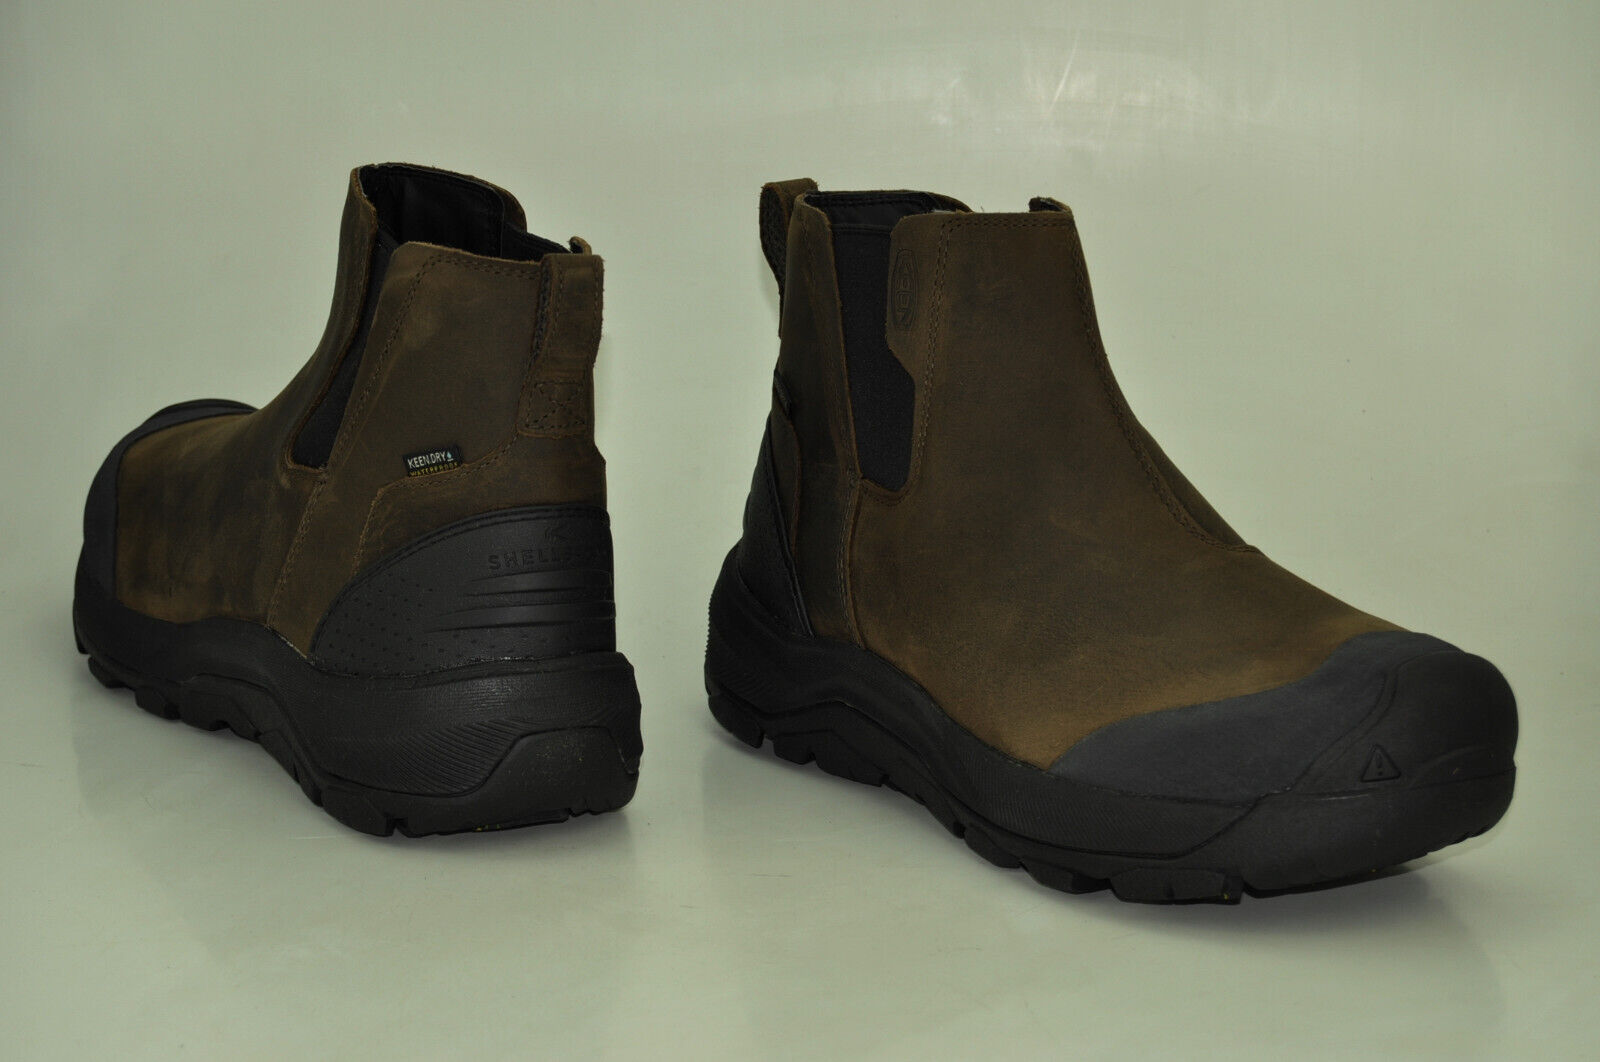 KEEN Revel IV Chelsea Boots Stiefel Waterproof Outdoorschuhe Herren Schuhgröße EUR 42 - UK 8 - US 9